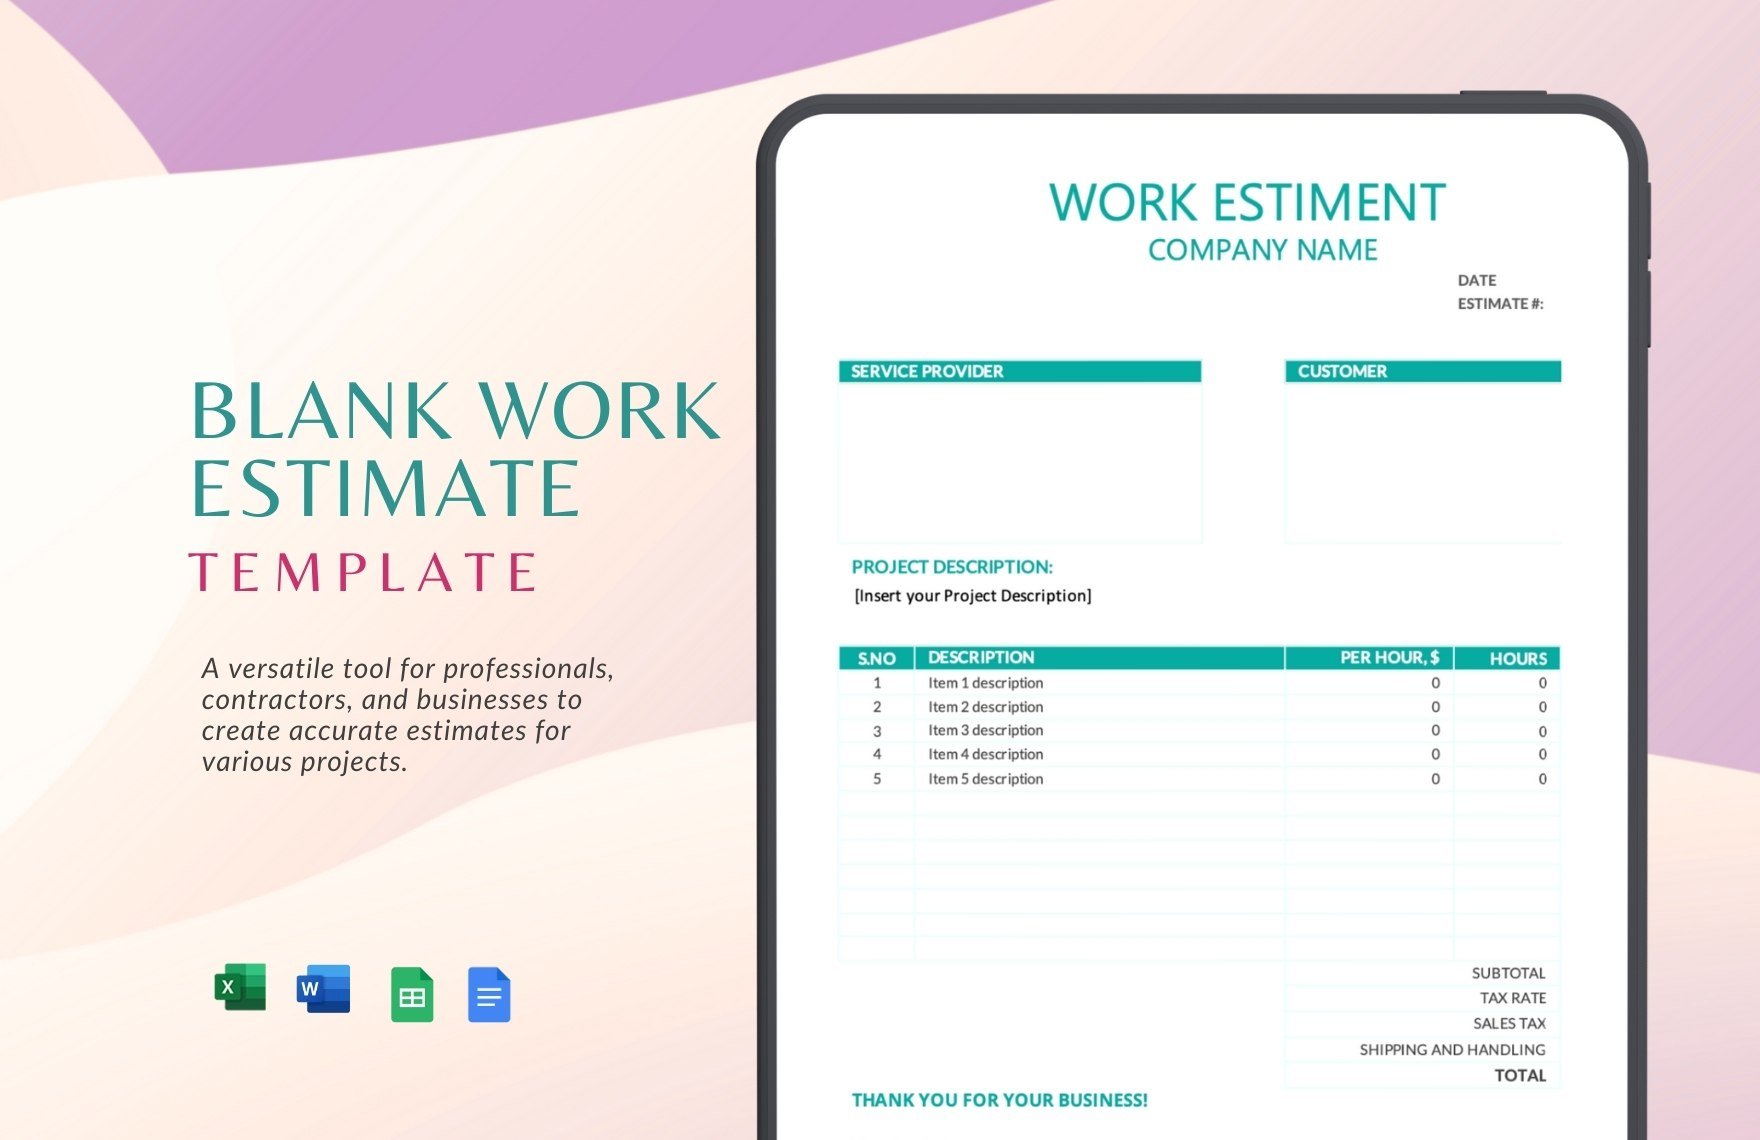 Free Blank Work Estimate Template in Word, Google Docs, Excel, Google Sheets